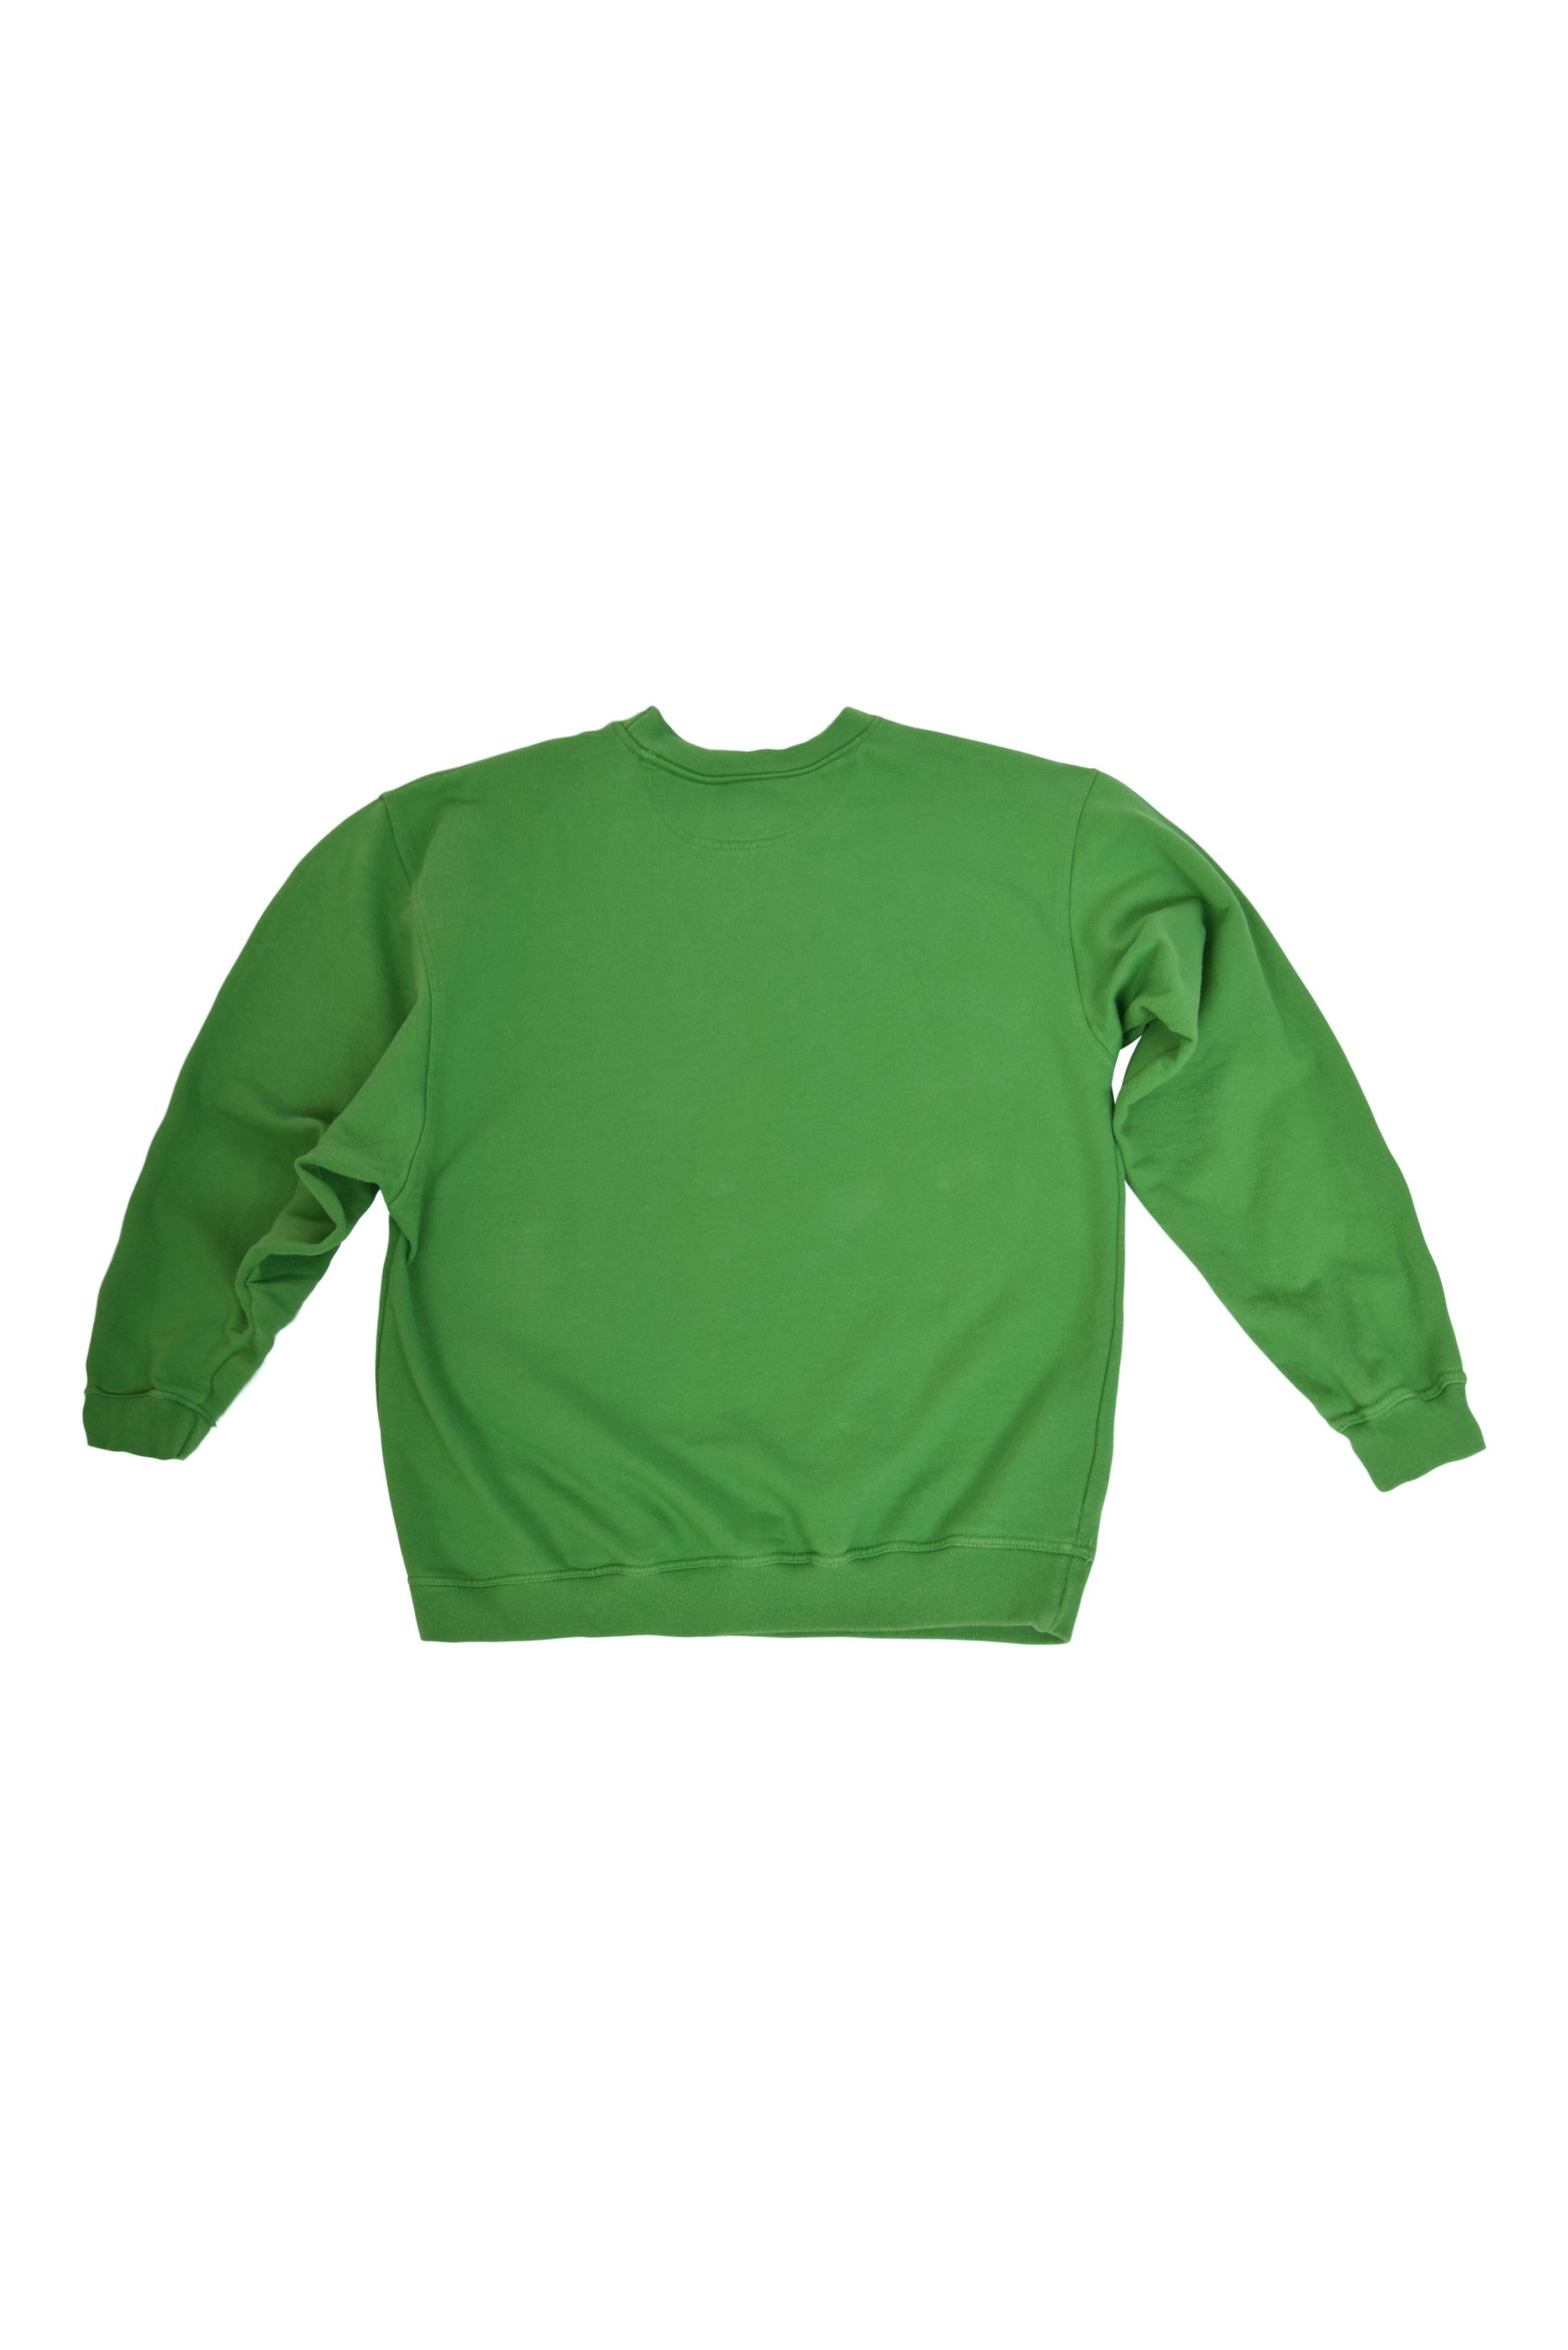 Vintage Adidas Sweatshirt 90's Size M Green